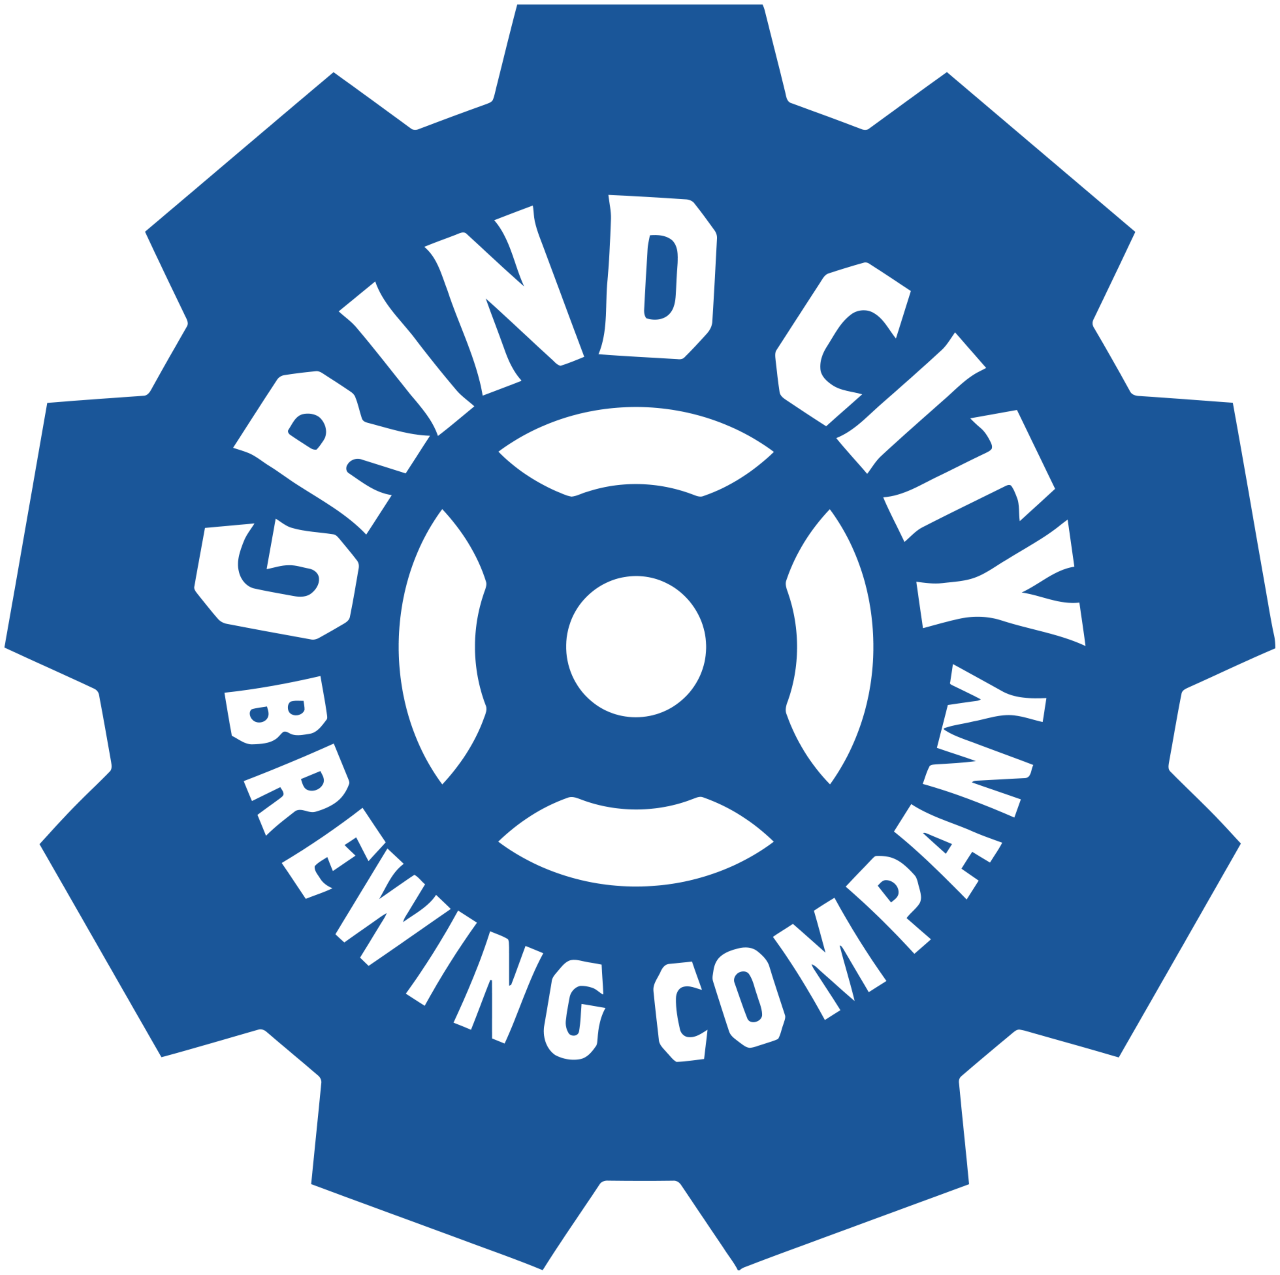 Grind City Brewing